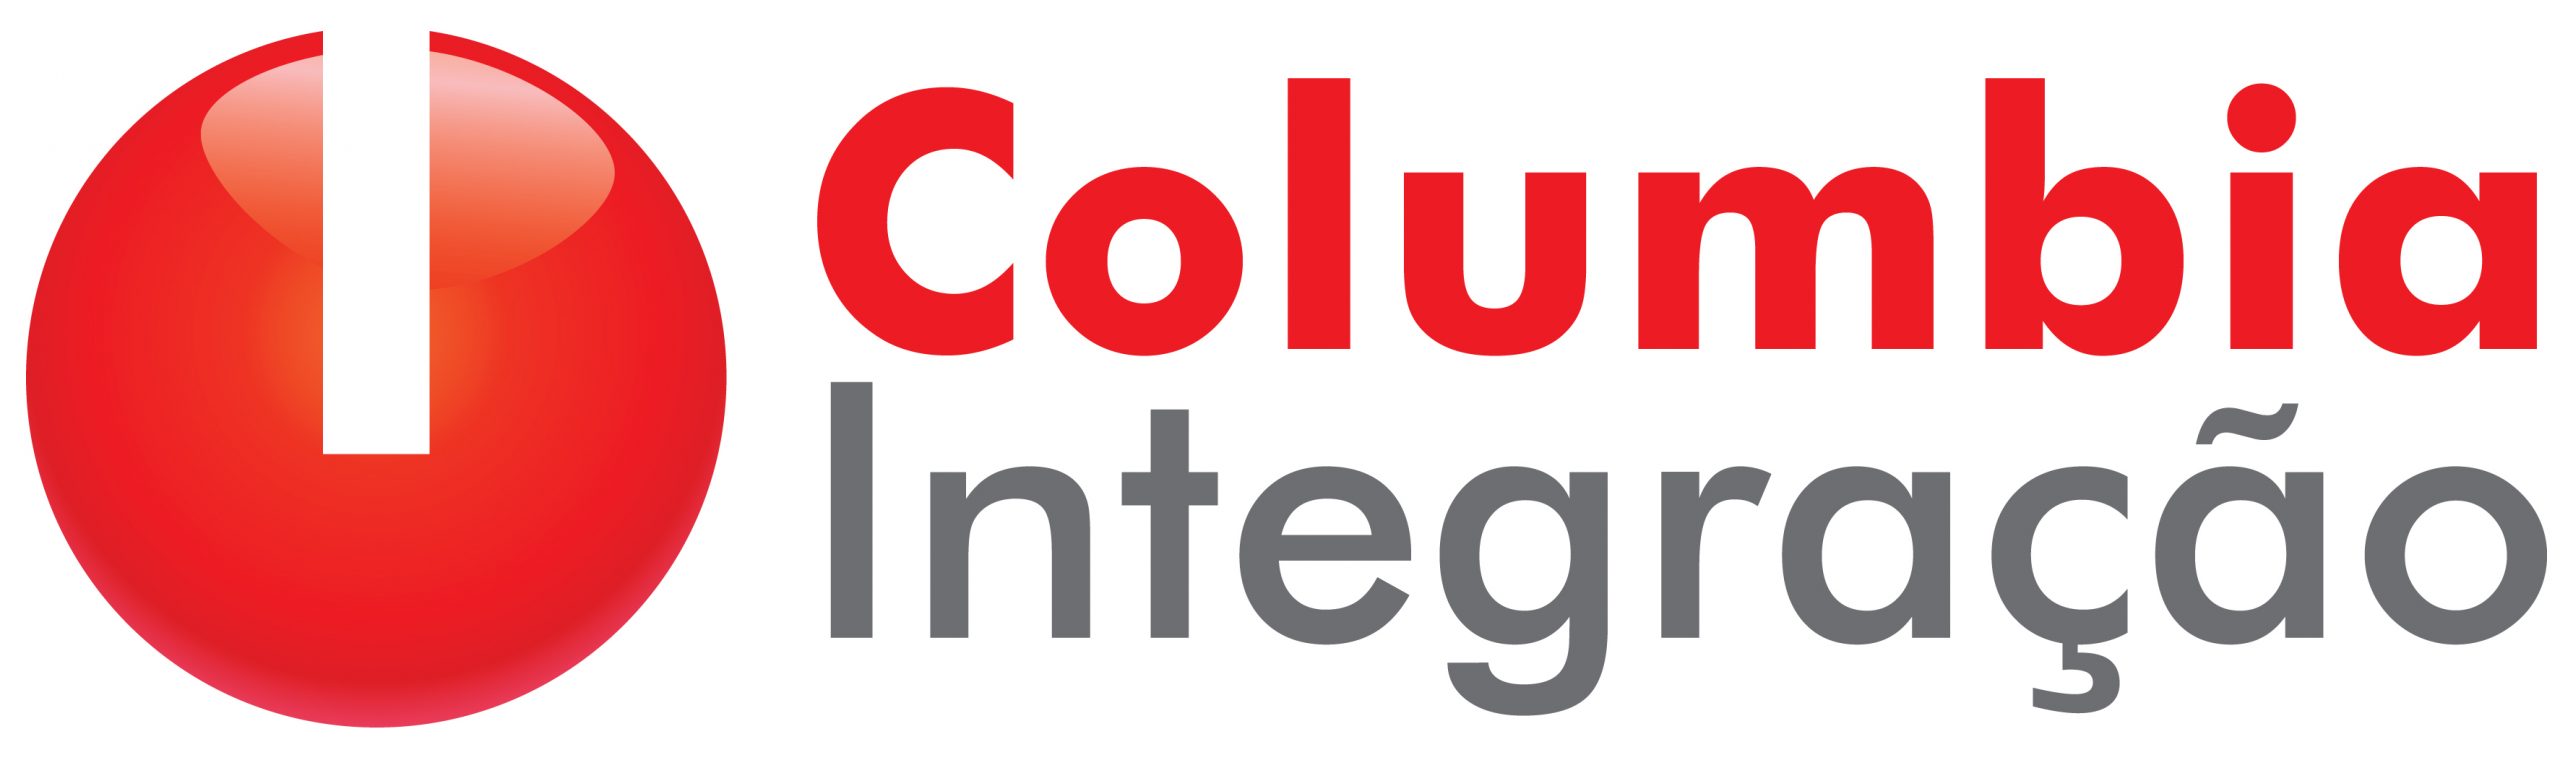 arte-logo-columbia---horizontal-cor-1-scaled